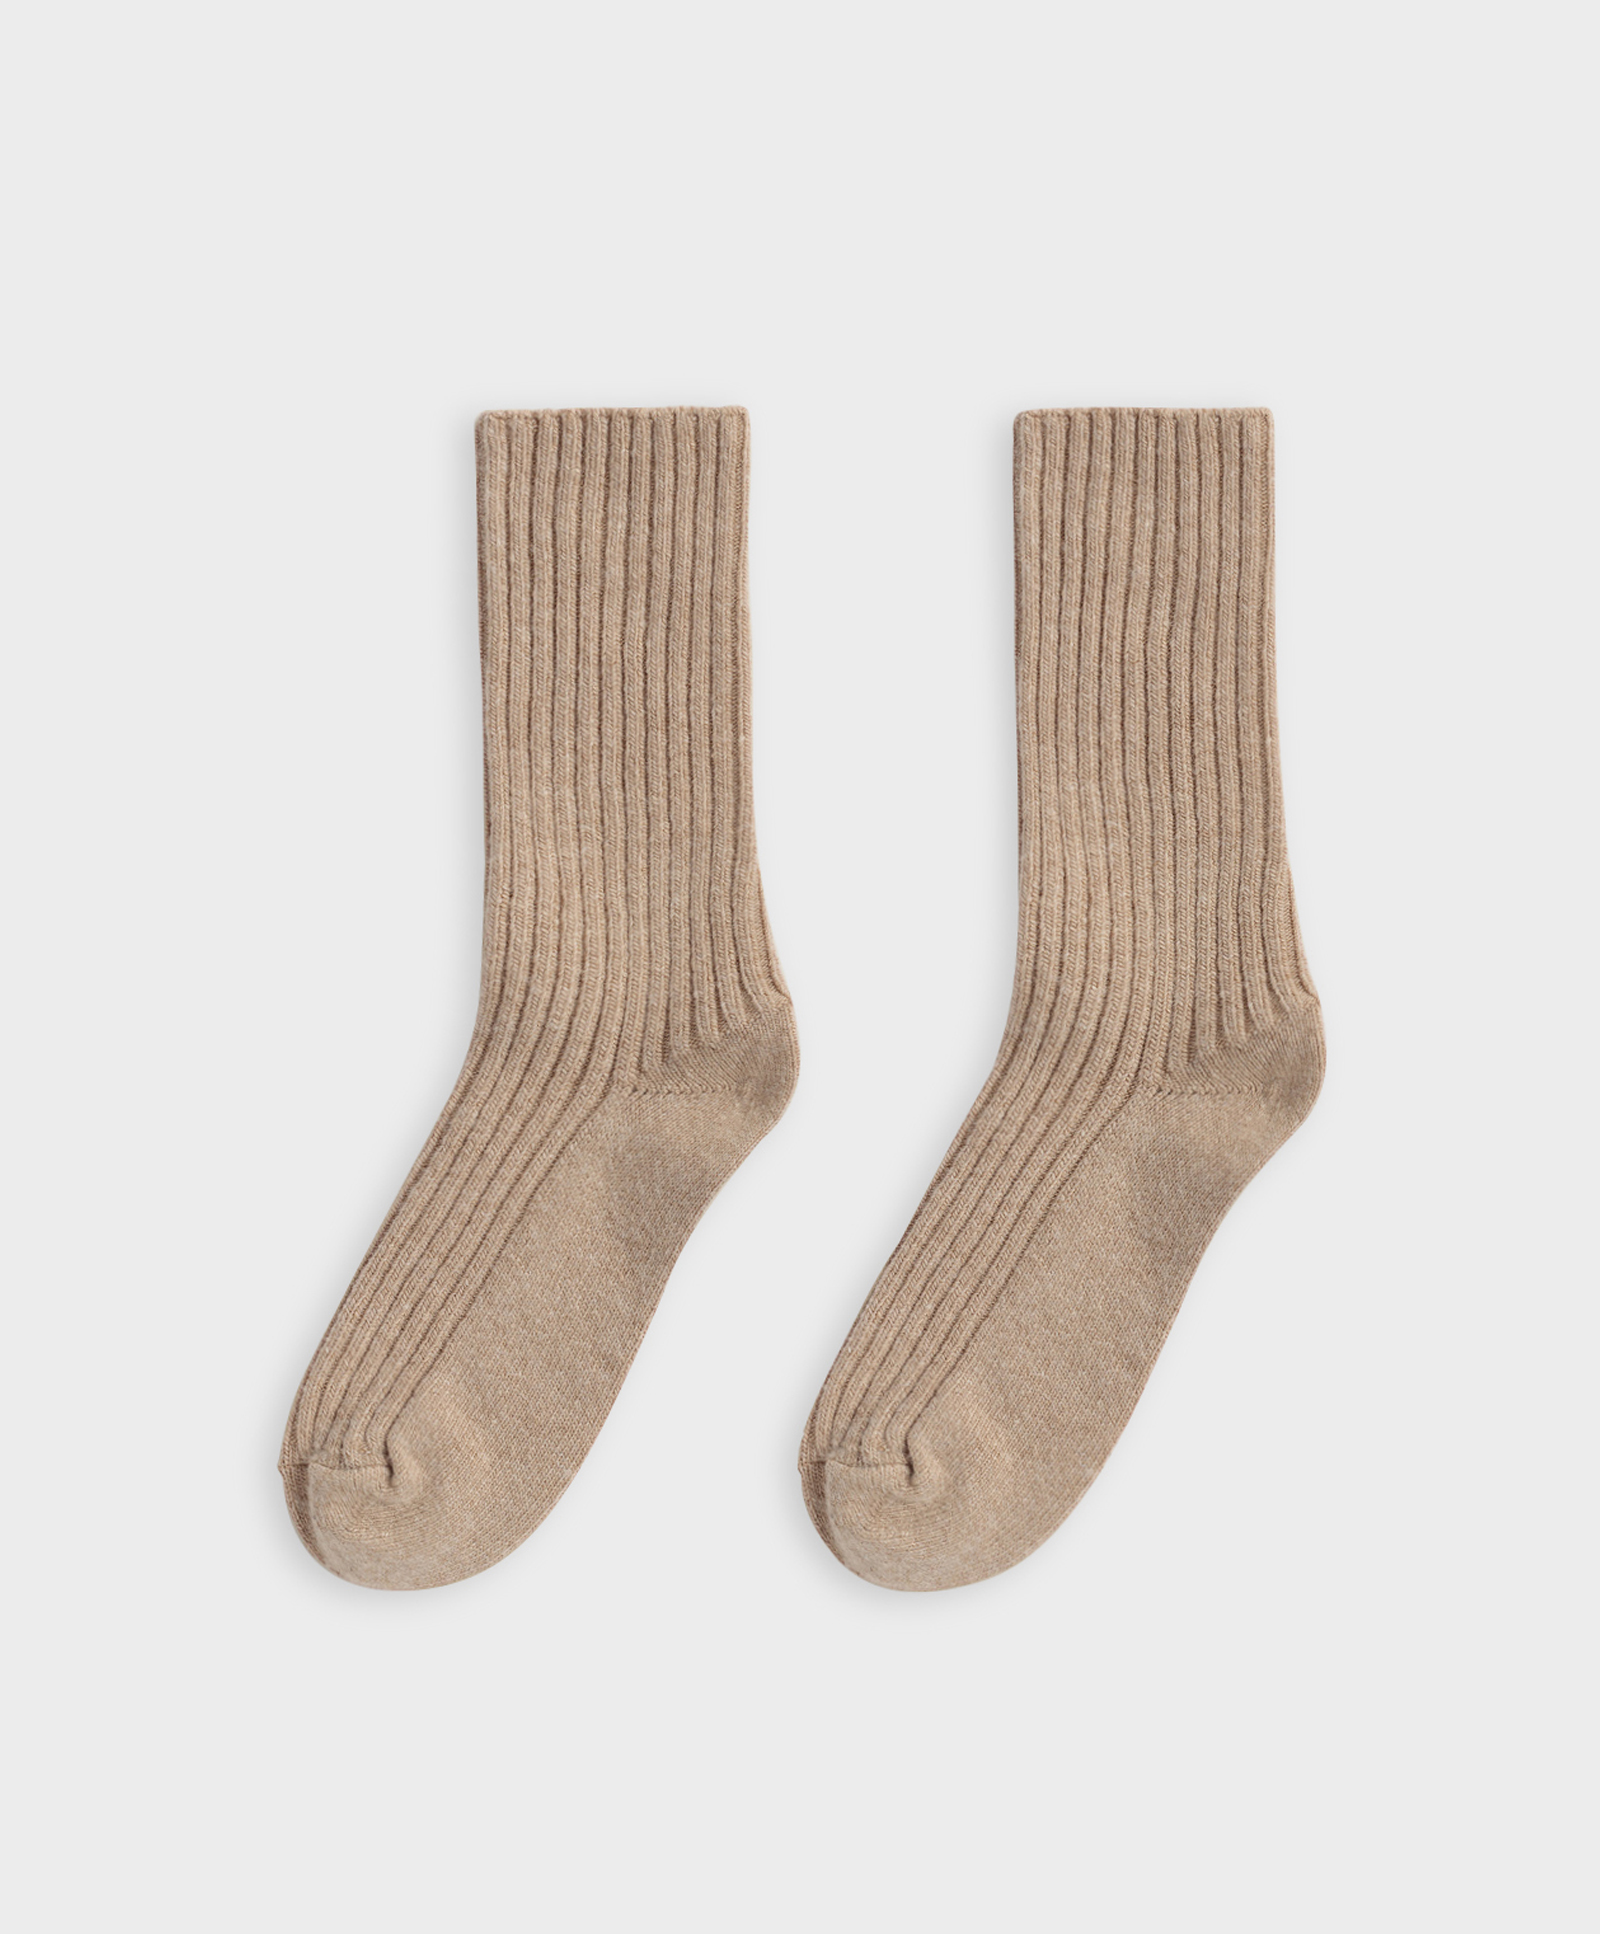 Medium ribbed wool and cashmere socks